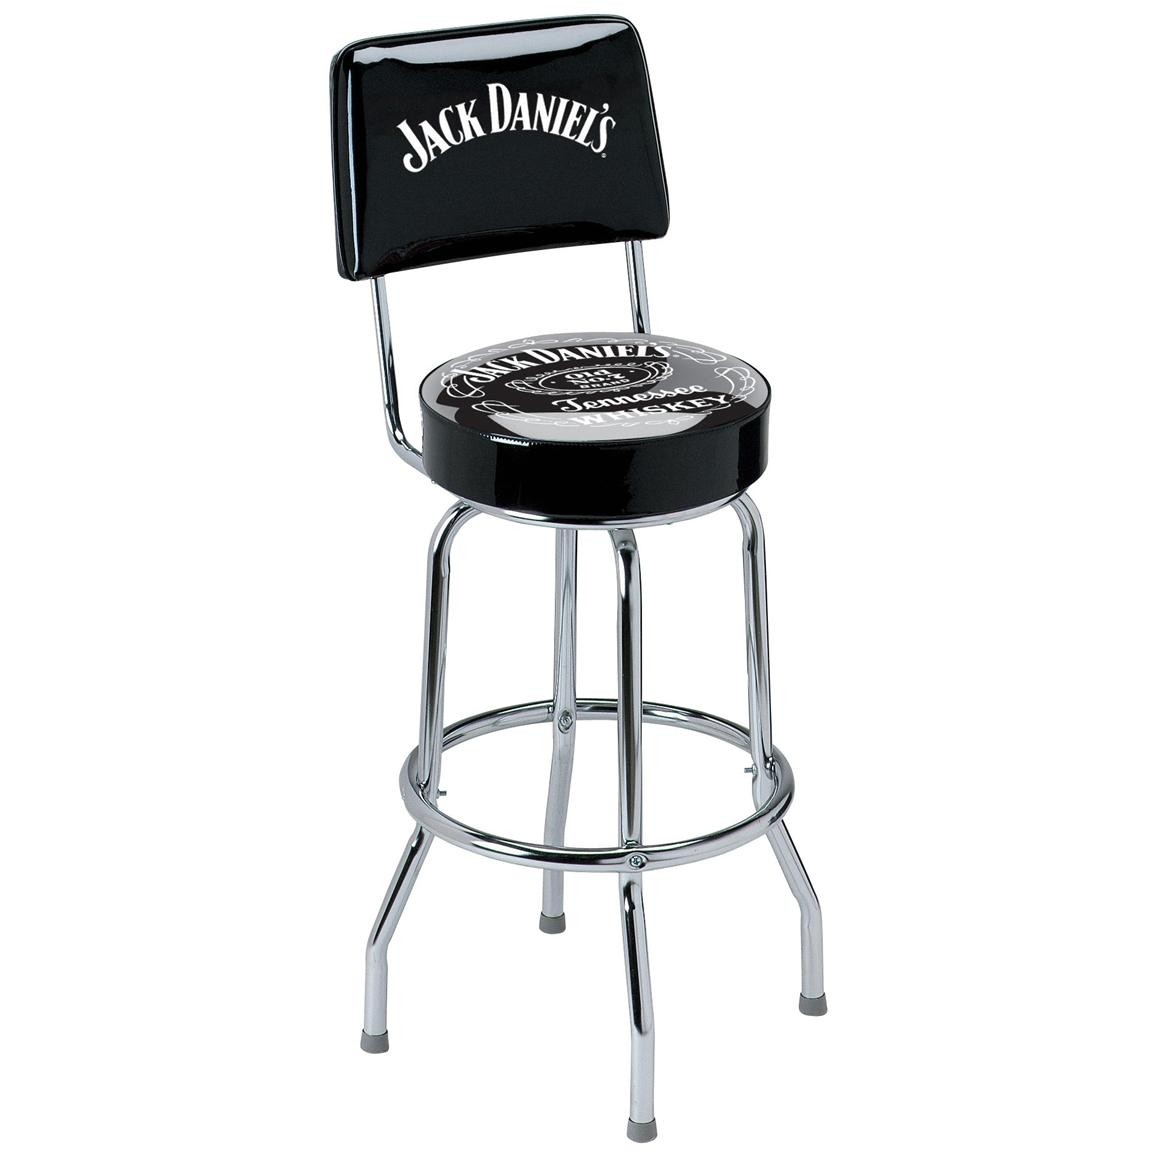 Jack daniels r bar stool with backrest 213026 at